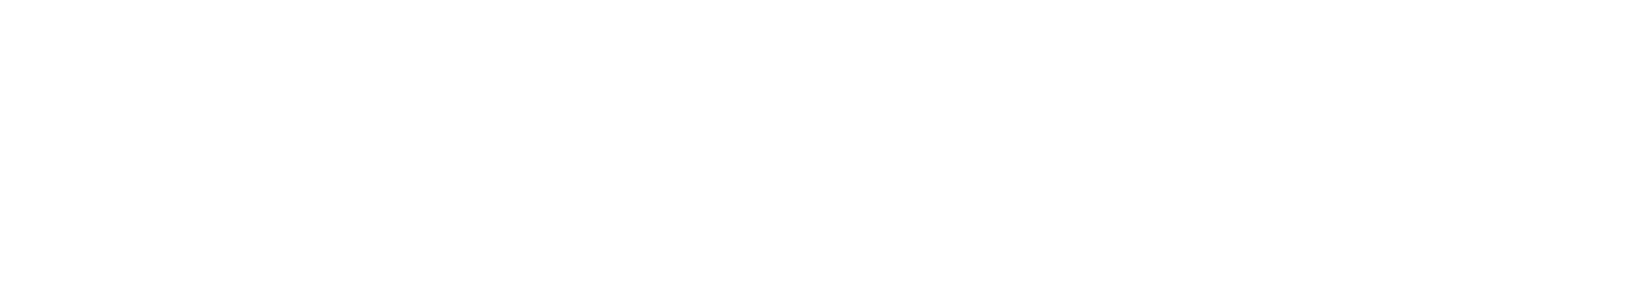 Eaton Vance Logo